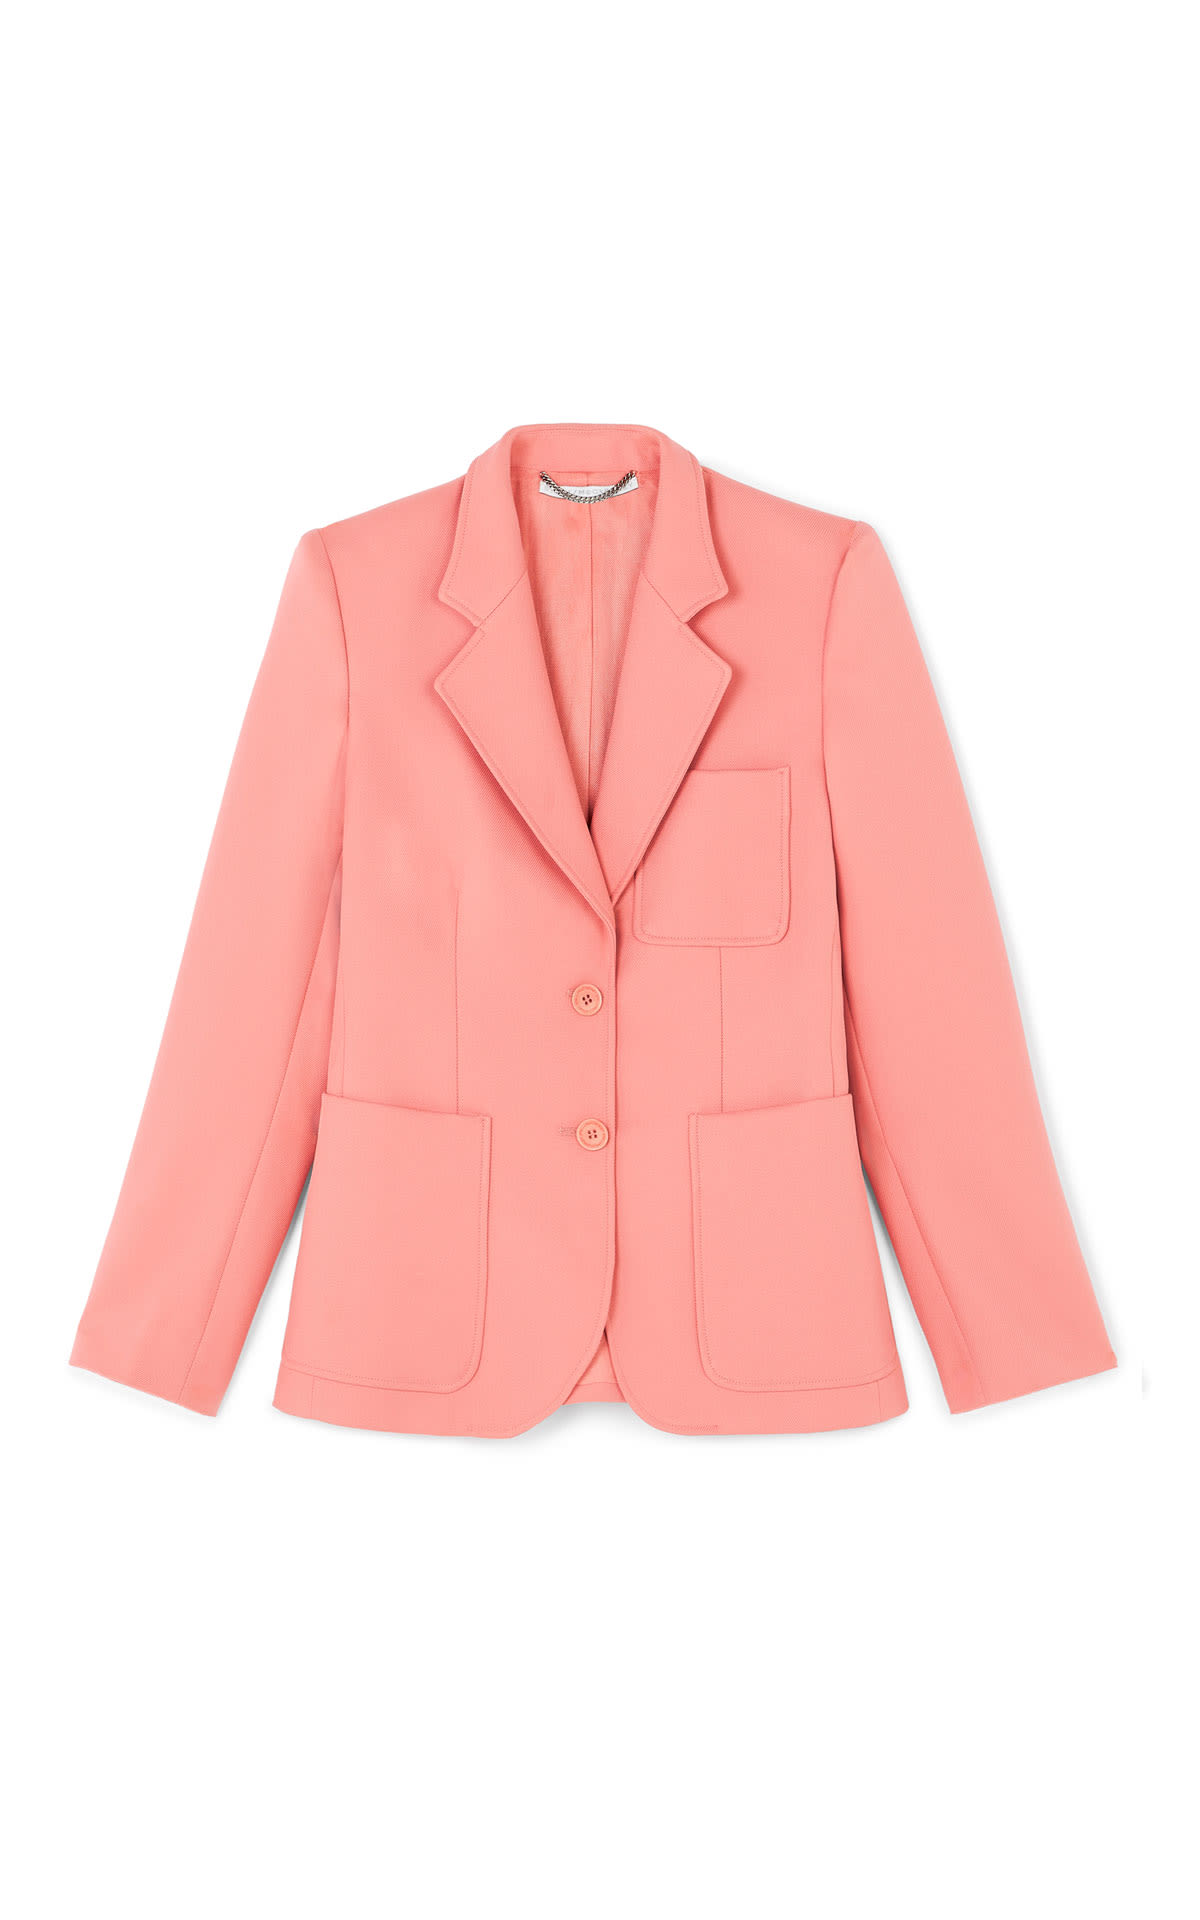 Stella McCartney Candy pink jacket from Bicester Village